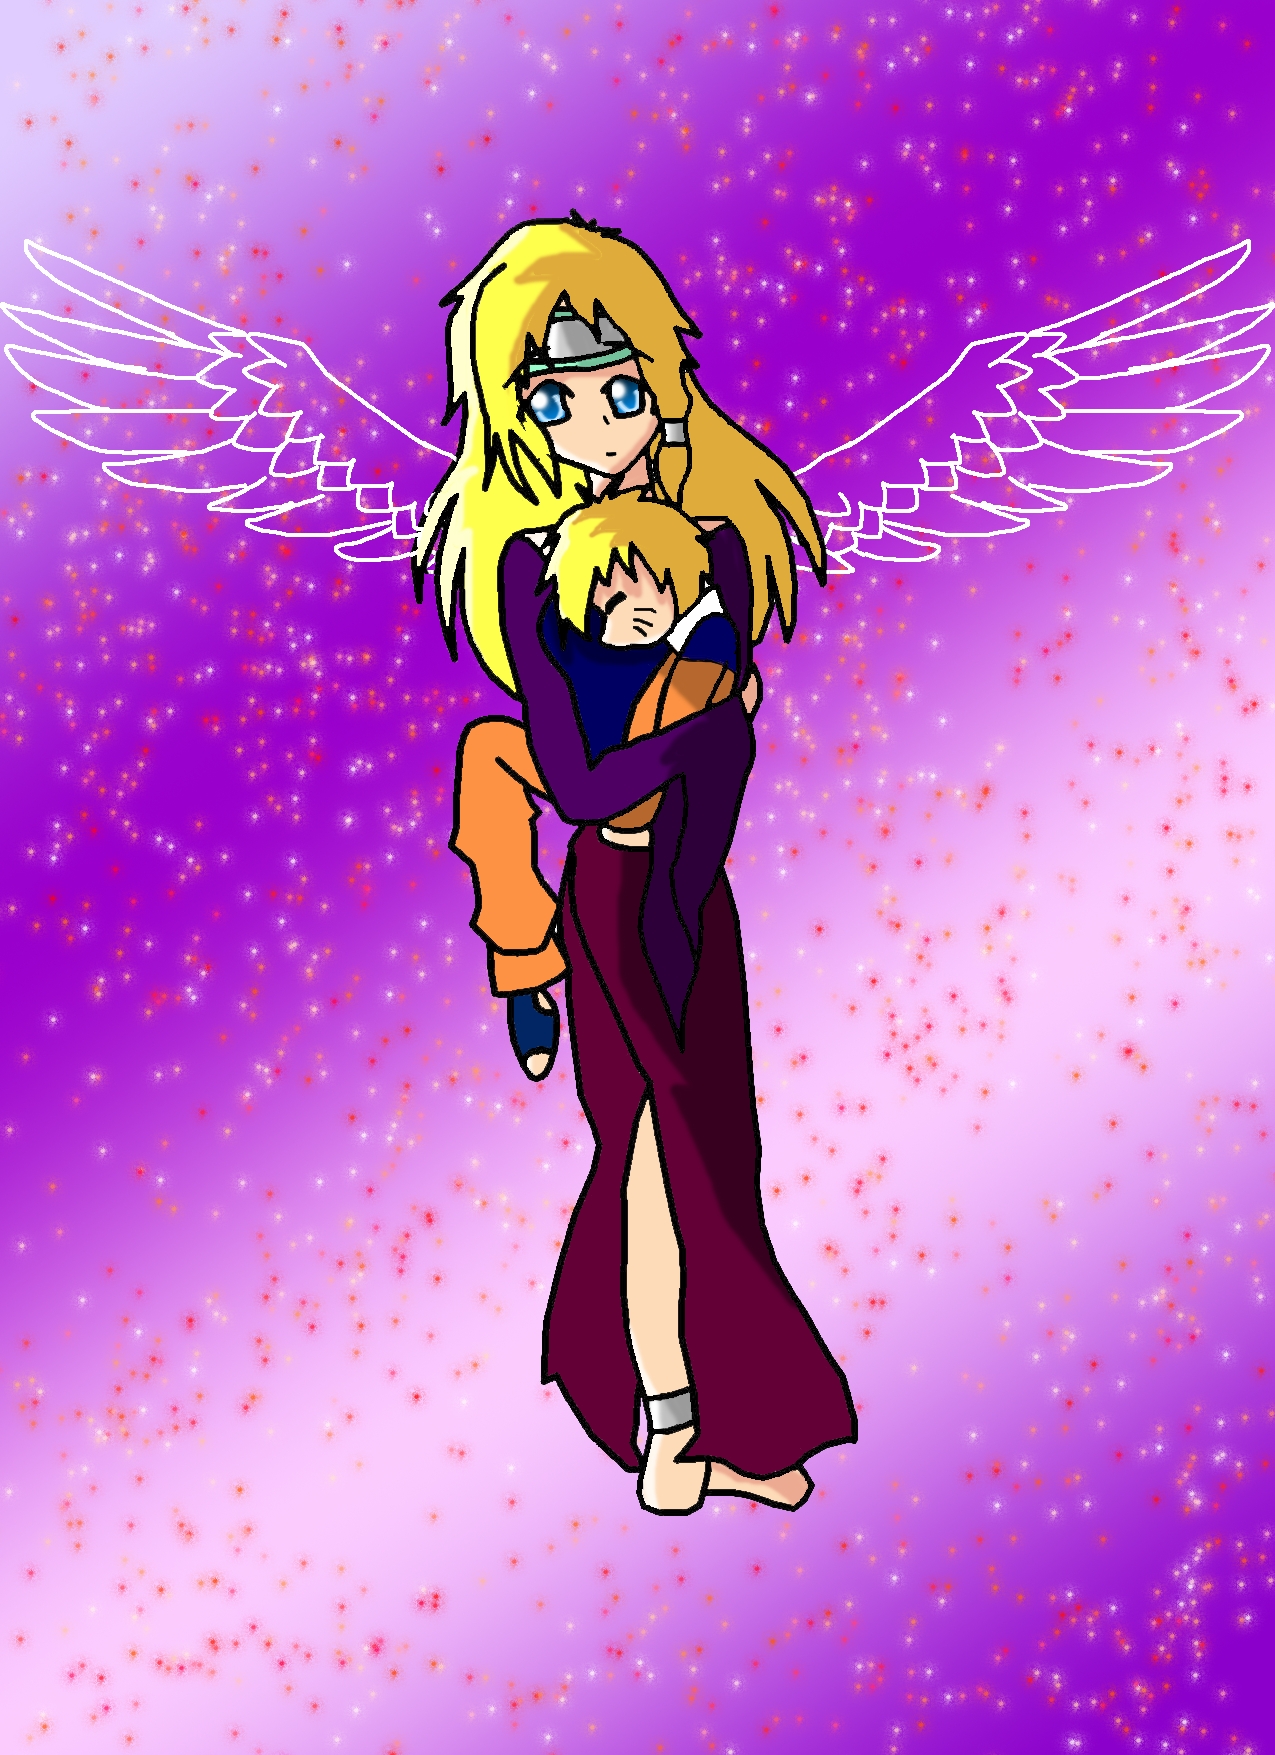 Naruto and Kira with wings by Kafaru